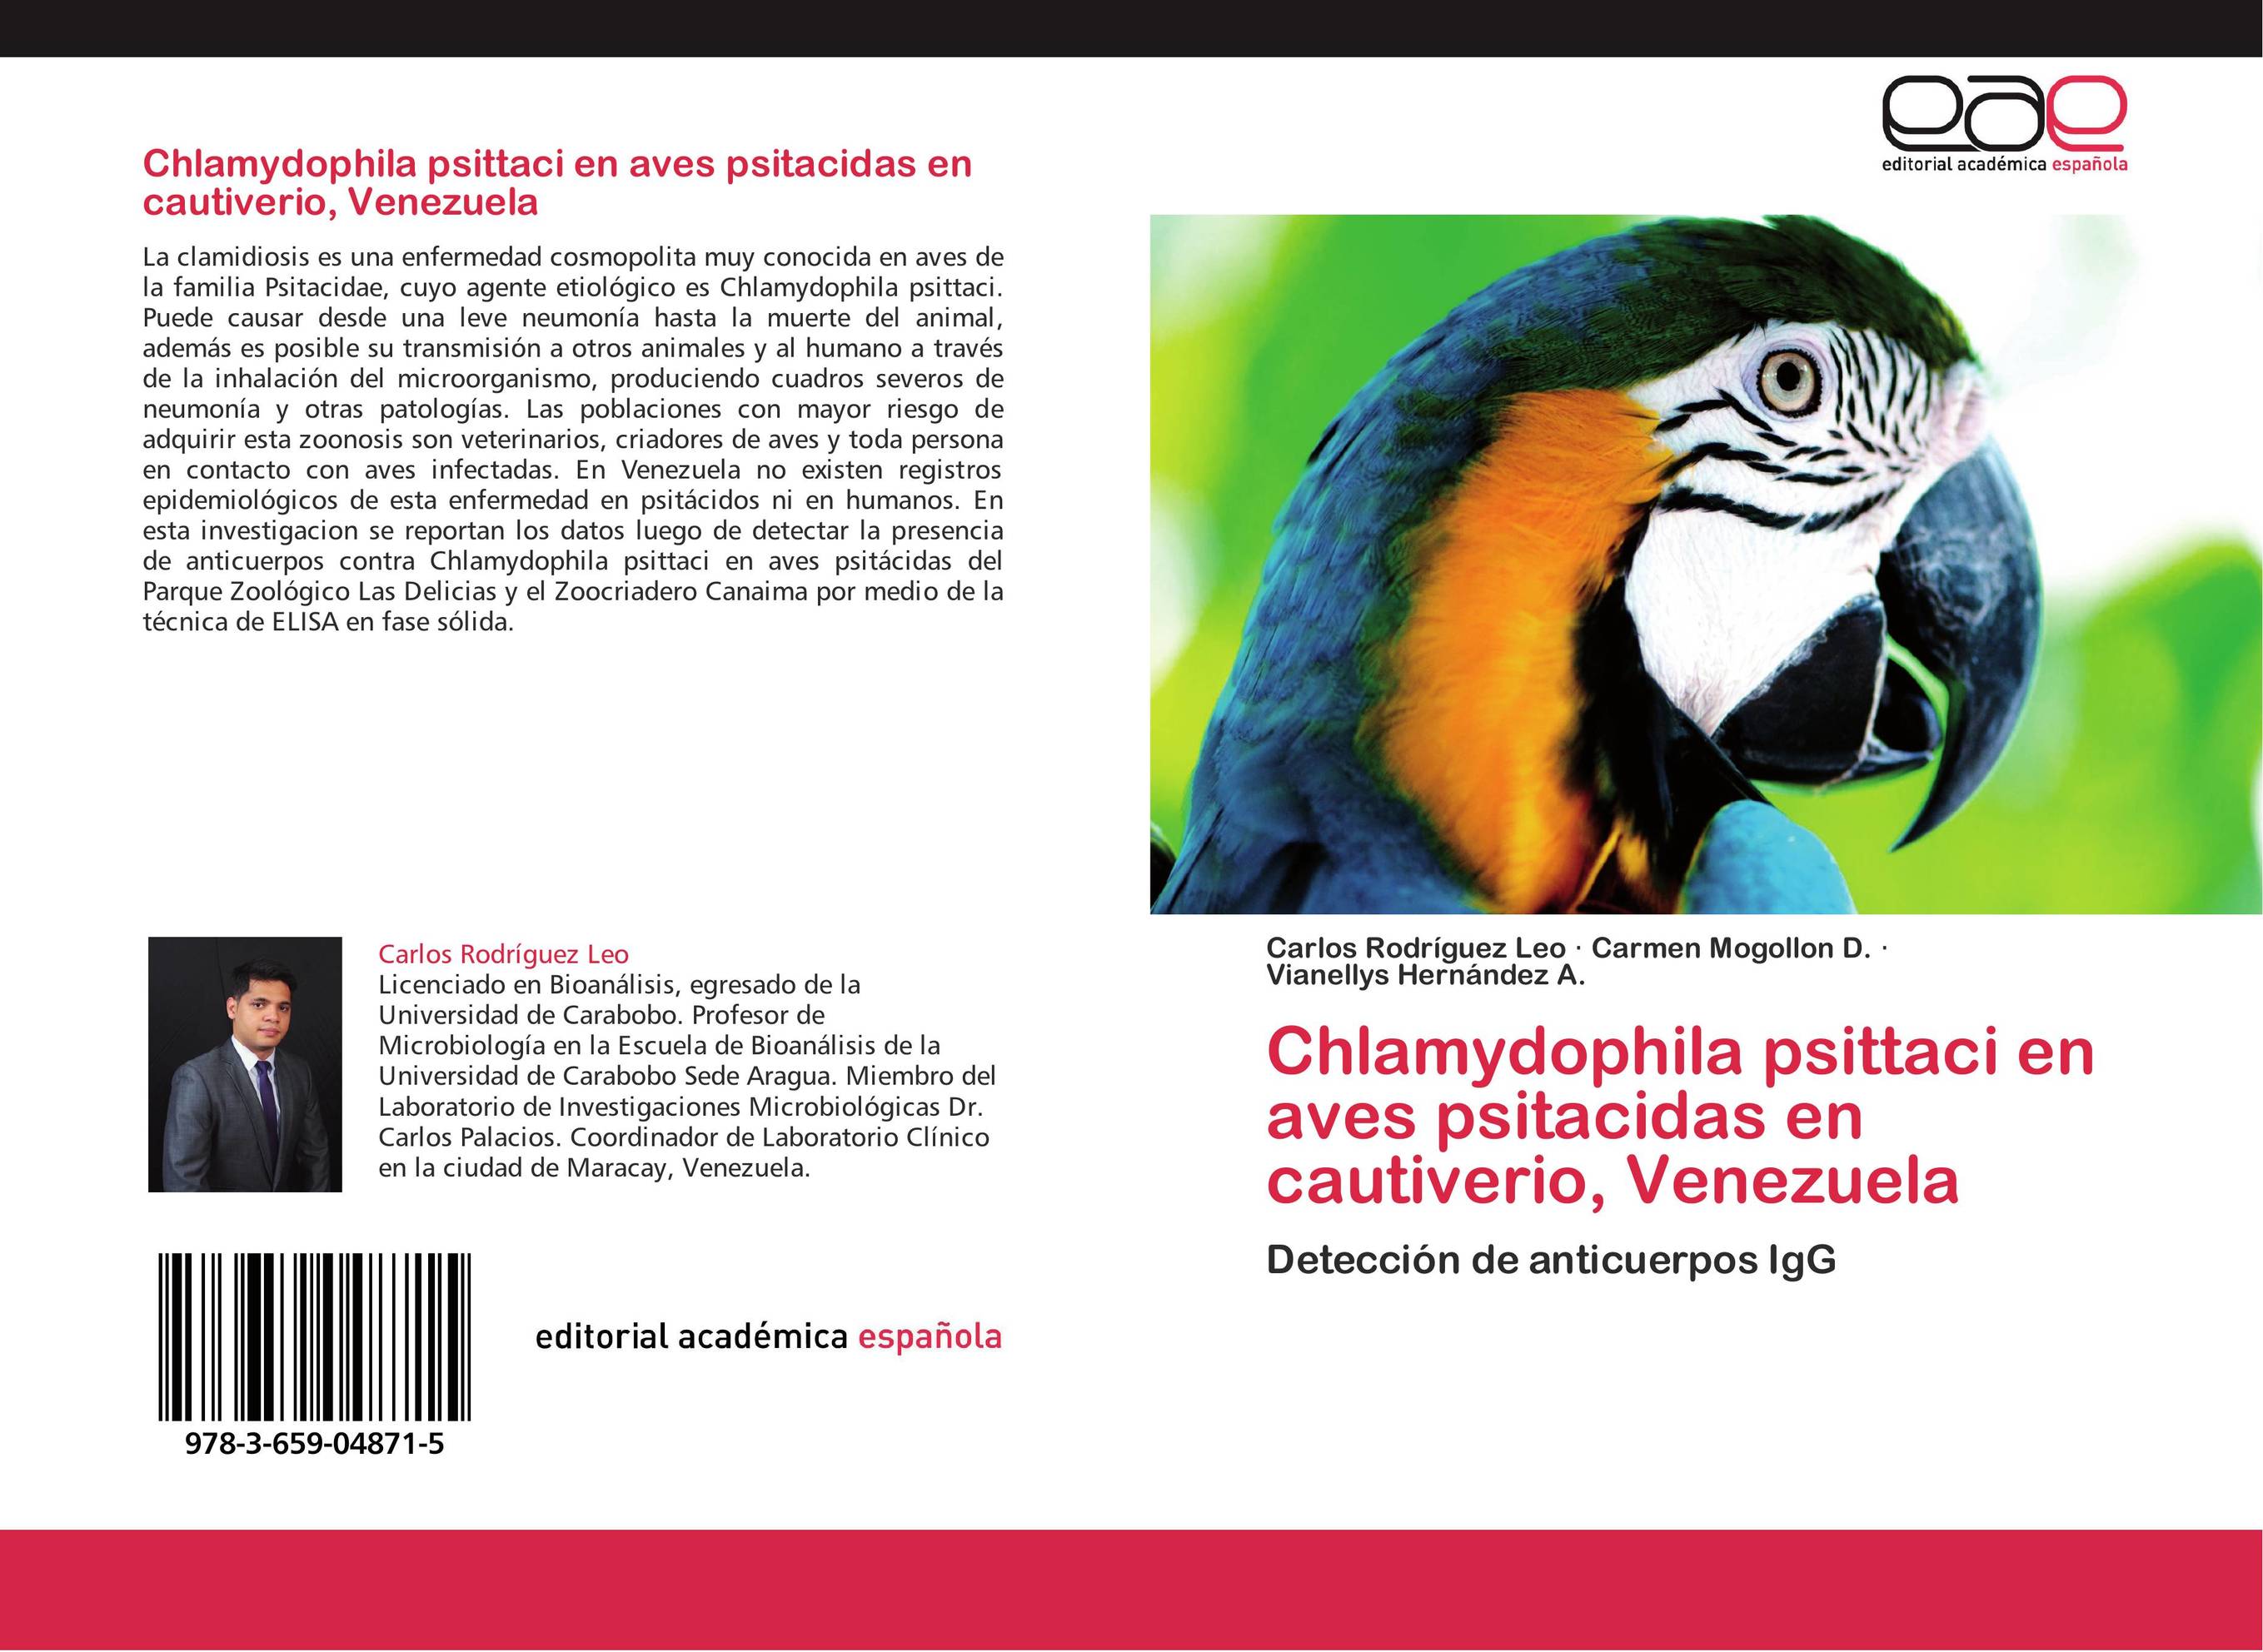 Chlamydophila psittaci en aves psitacidas en cautiverio, Venezuela